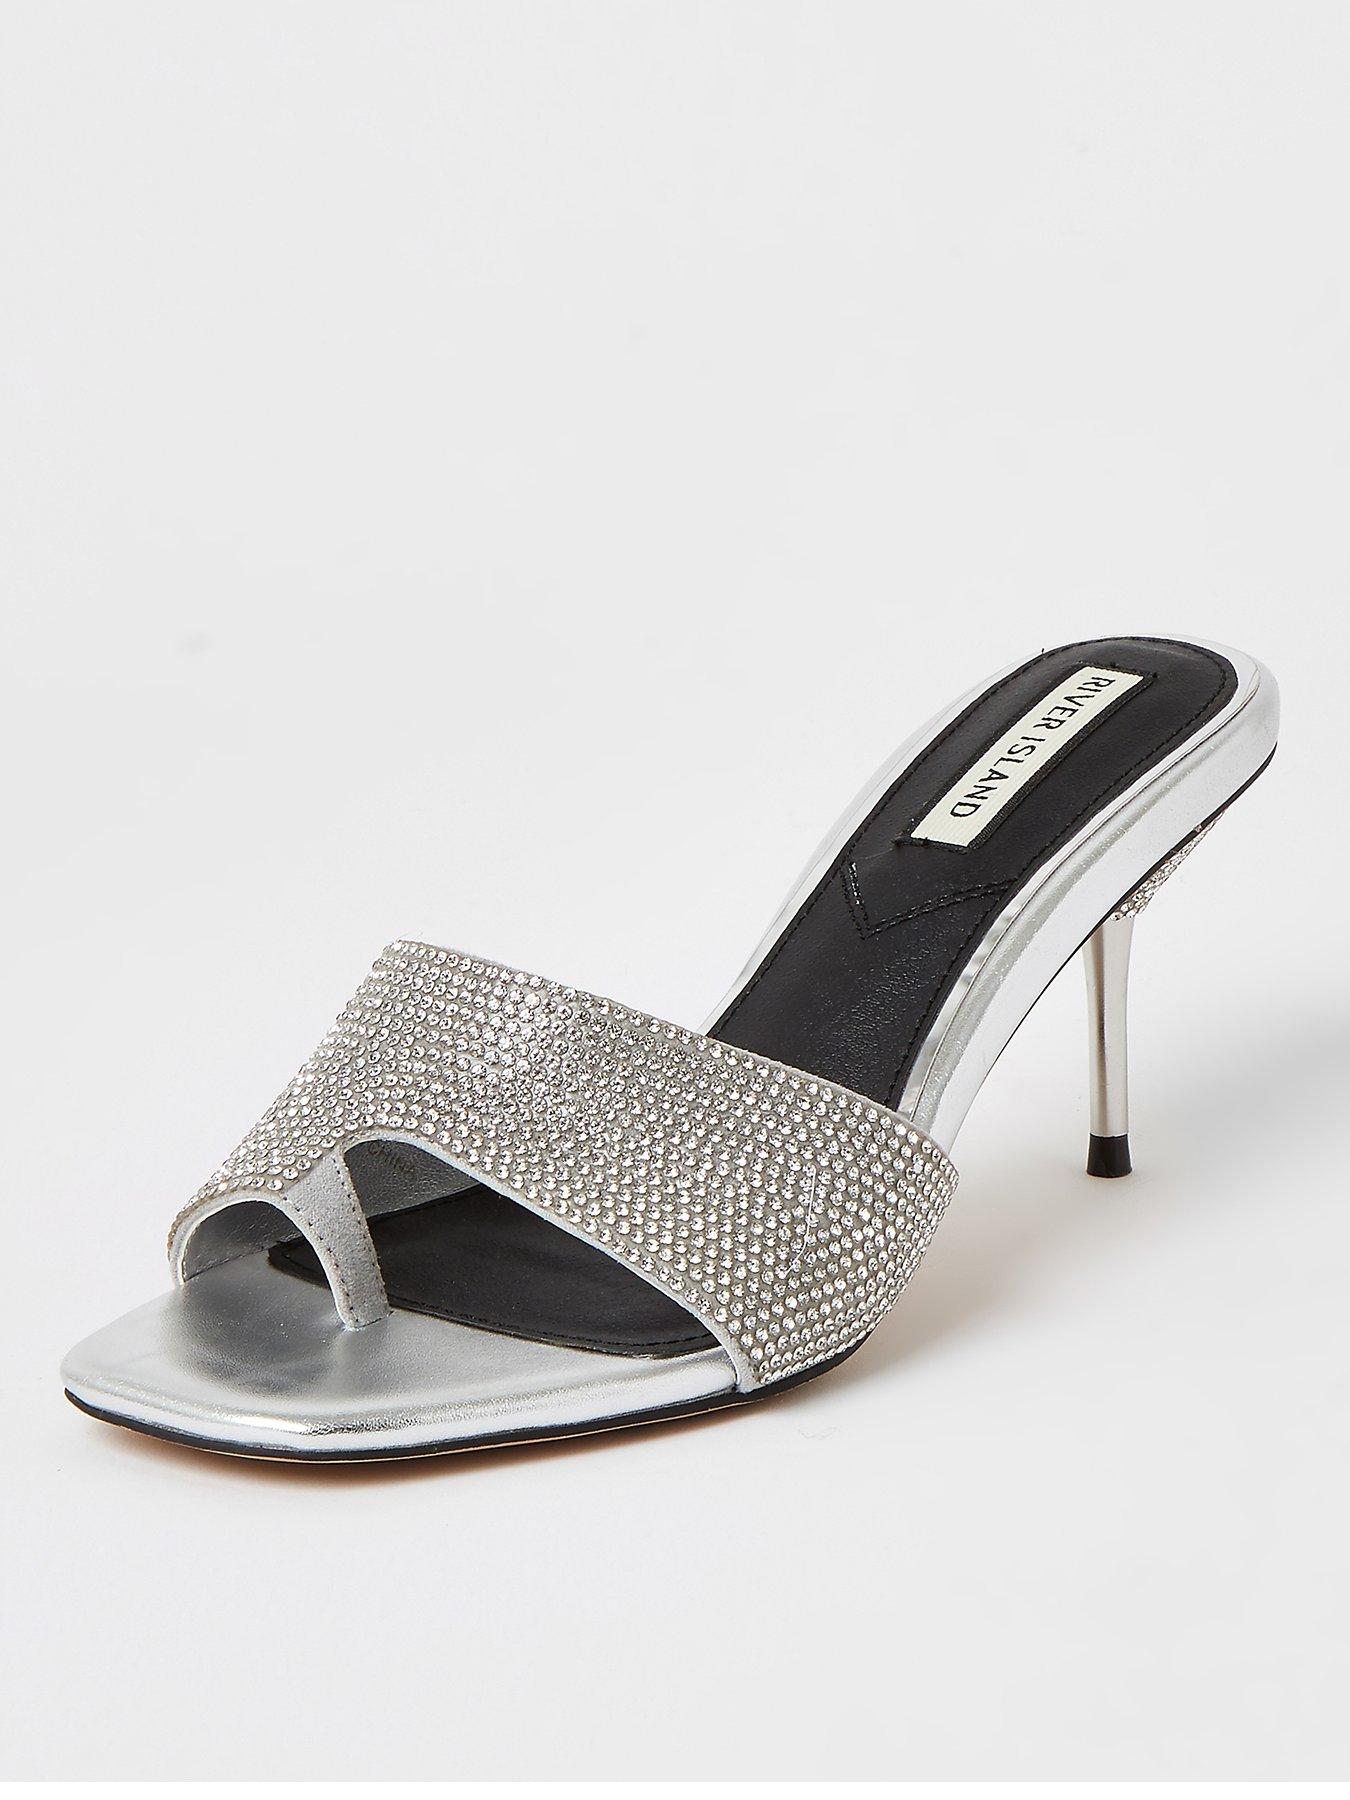 river island silver heels